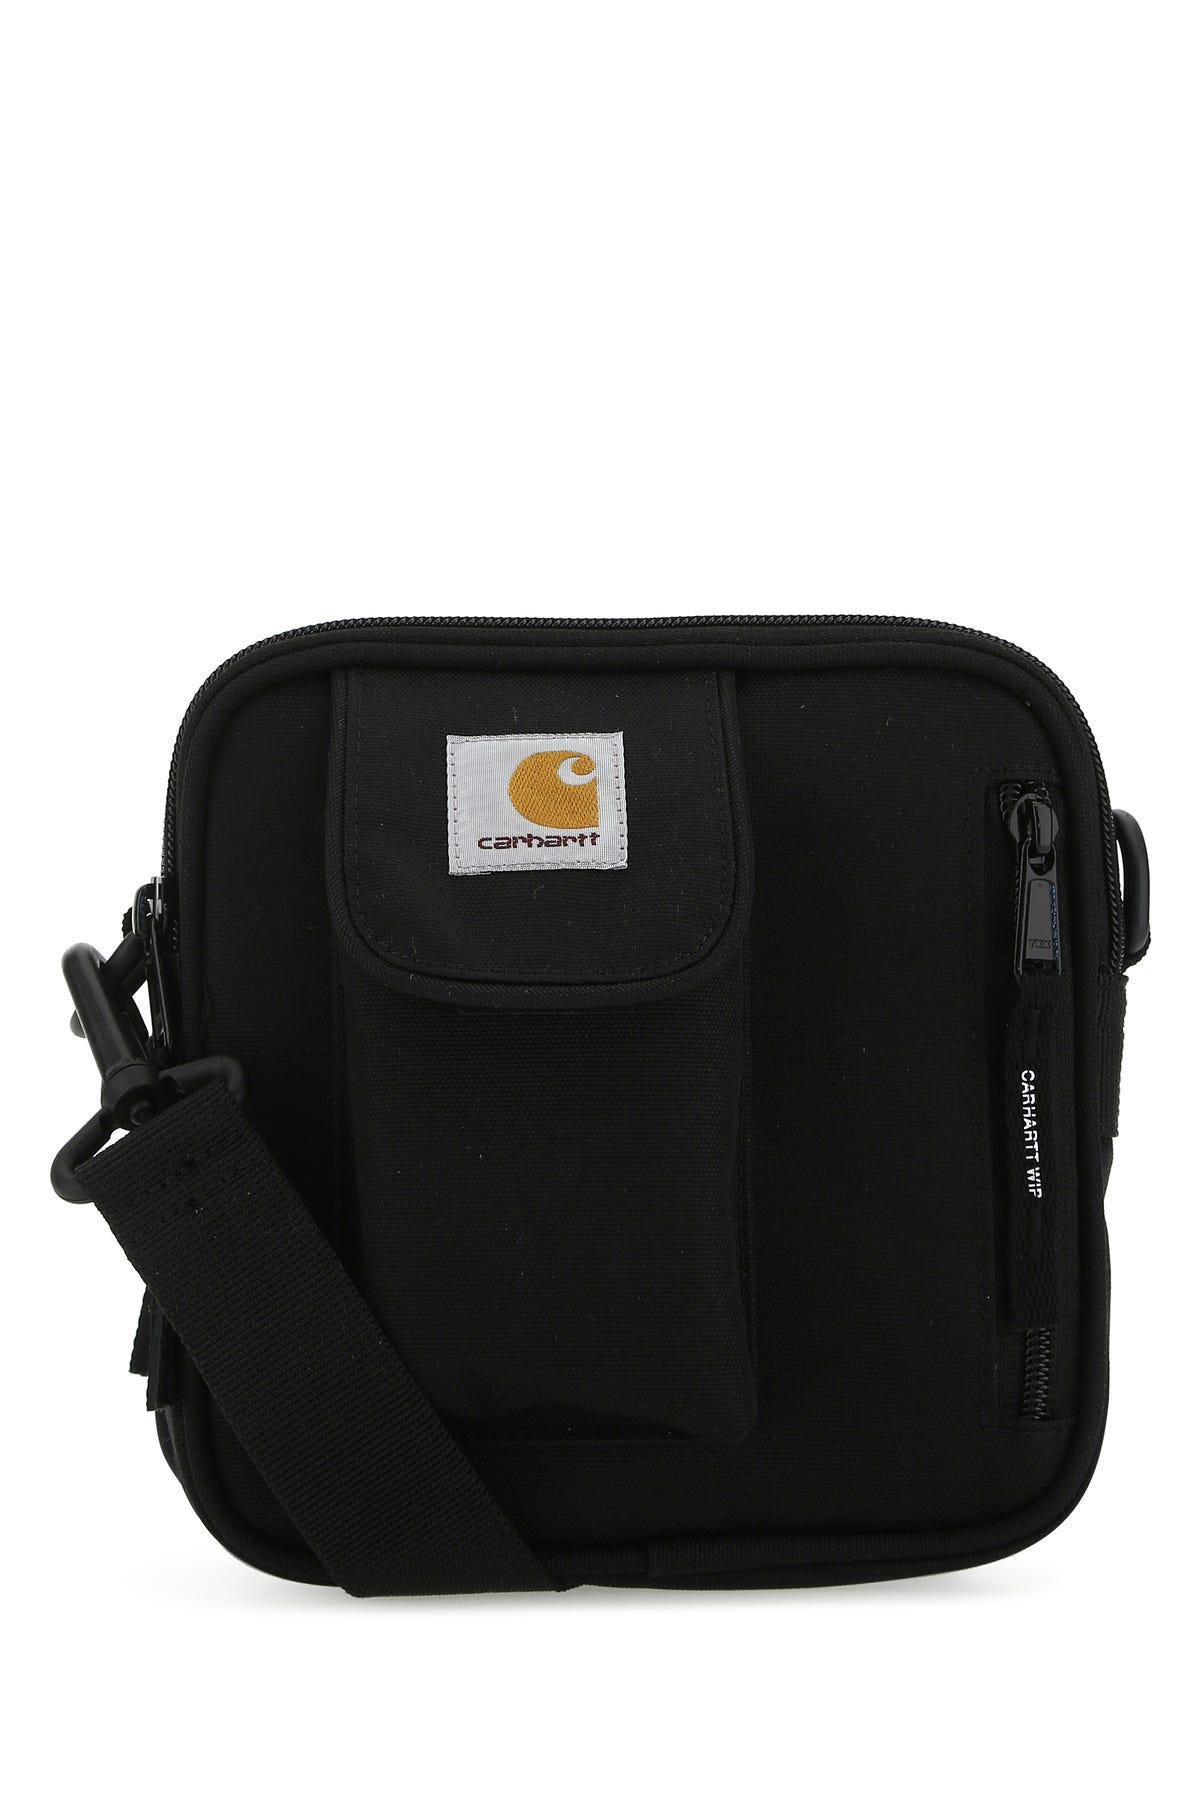 Carhartt WIP Black Canvas Essentials Bag for Men | Lyst